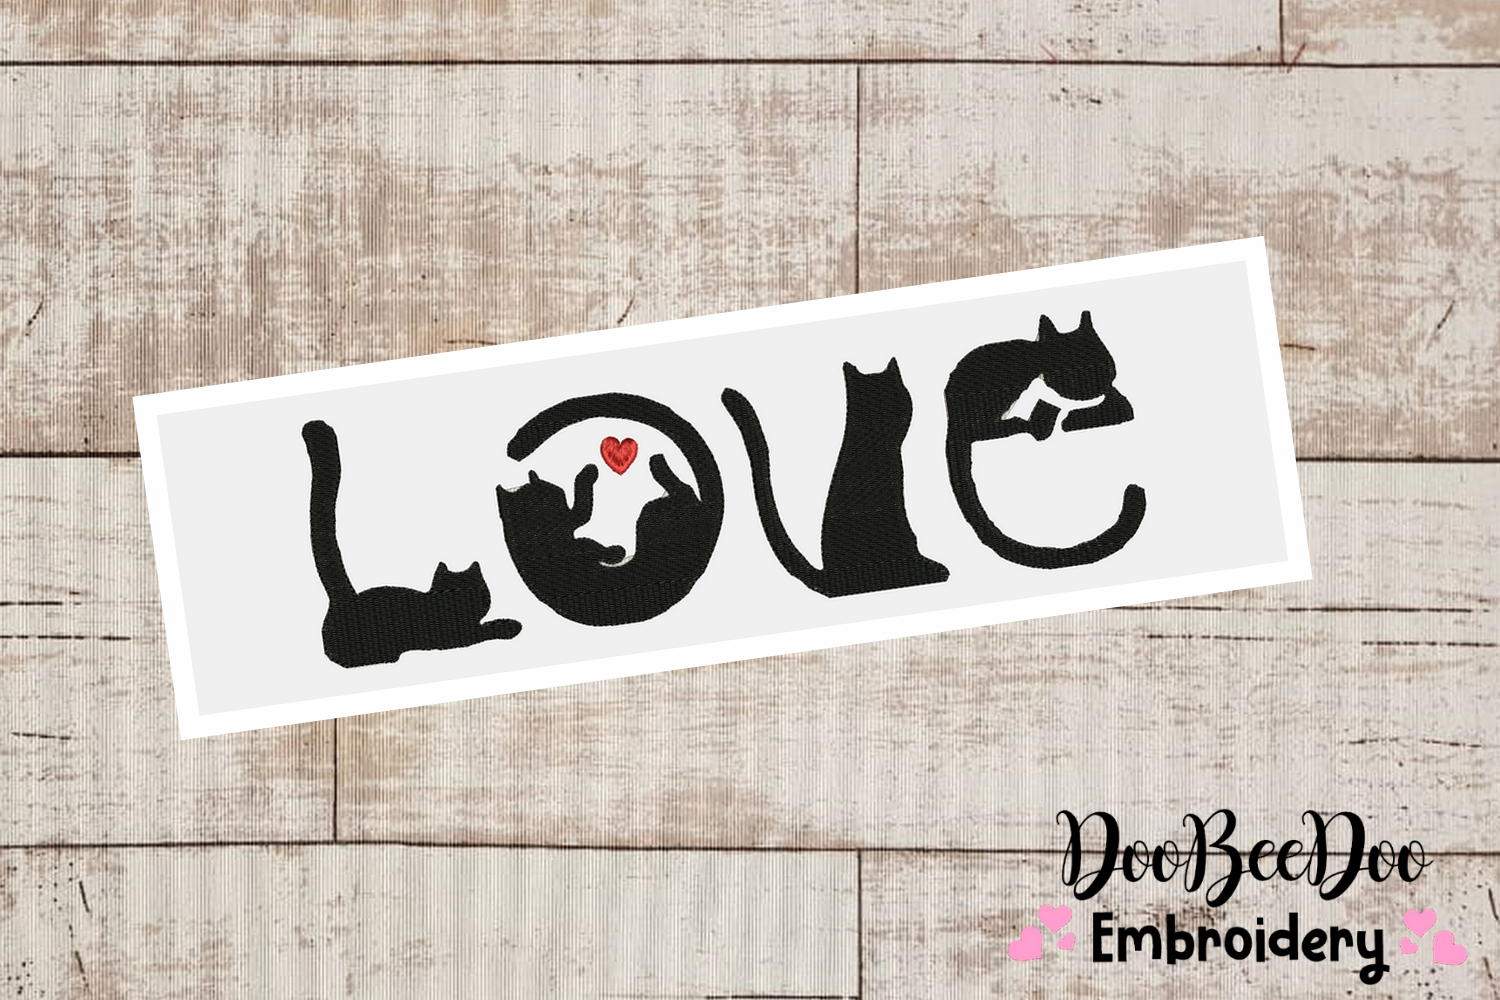 Love embroidery design, Valentine's Day machine embroidery